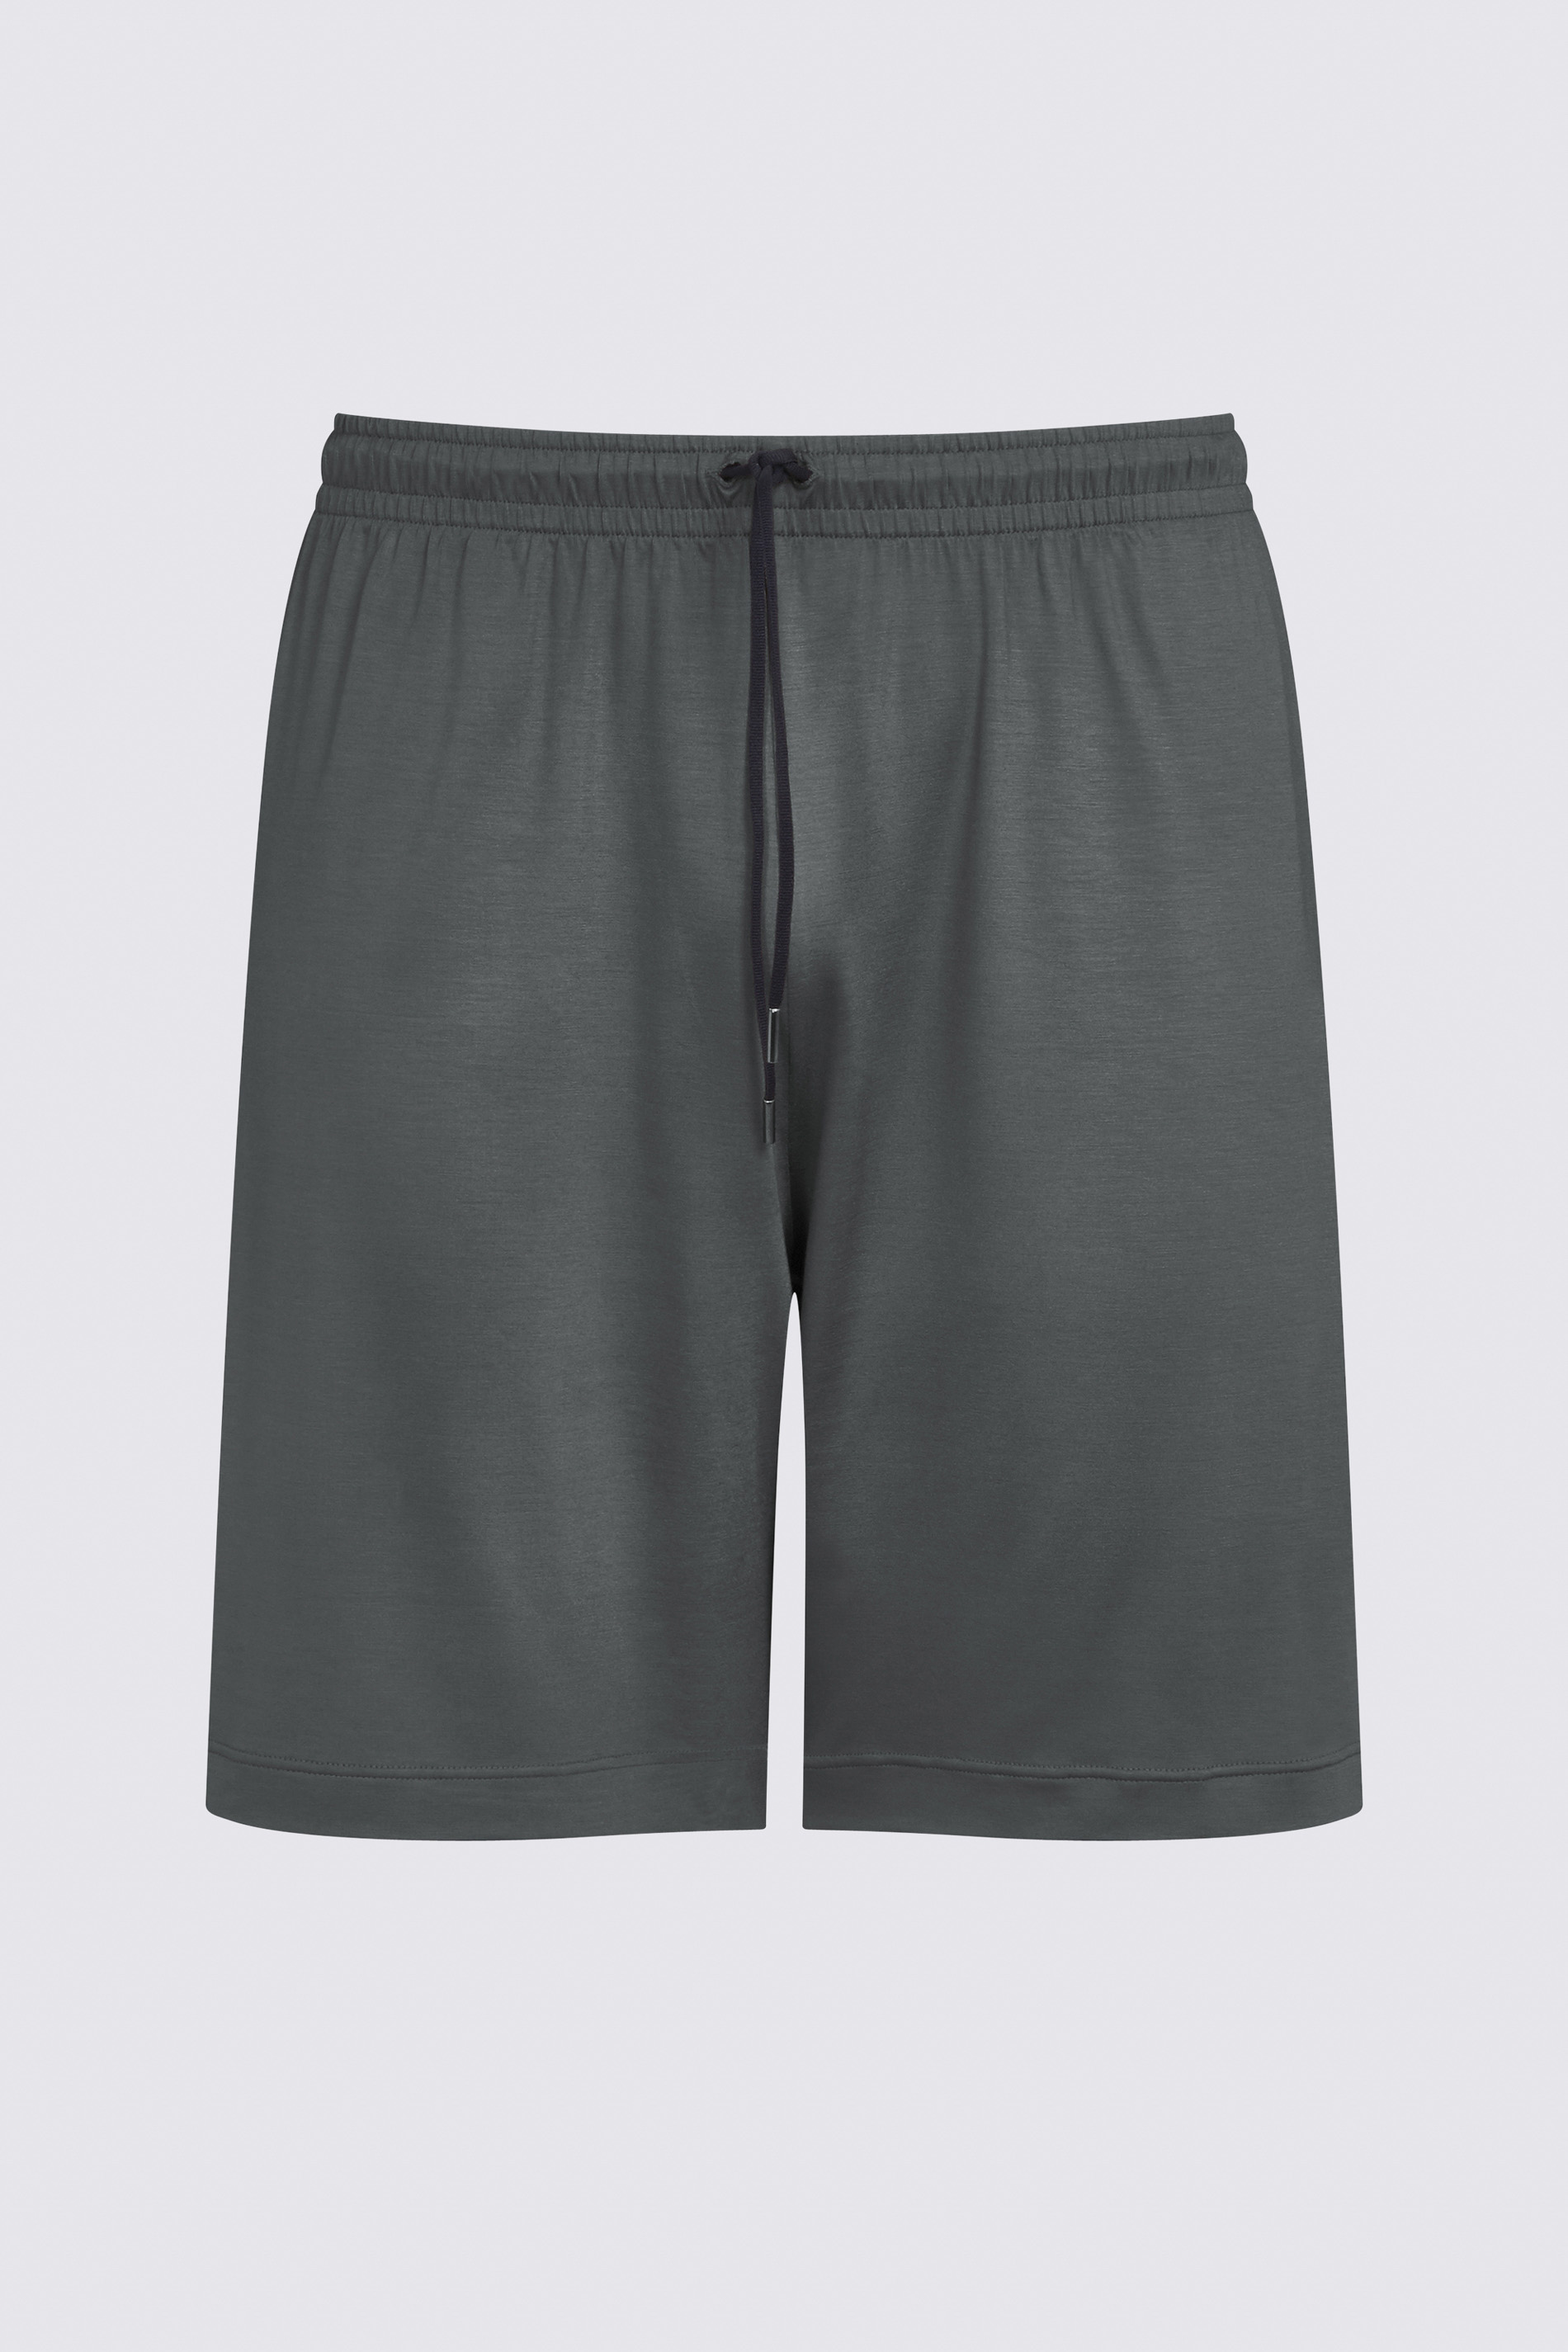 Short pants Stormy Grey Serie Jefferson Modal Cut Out | mey®